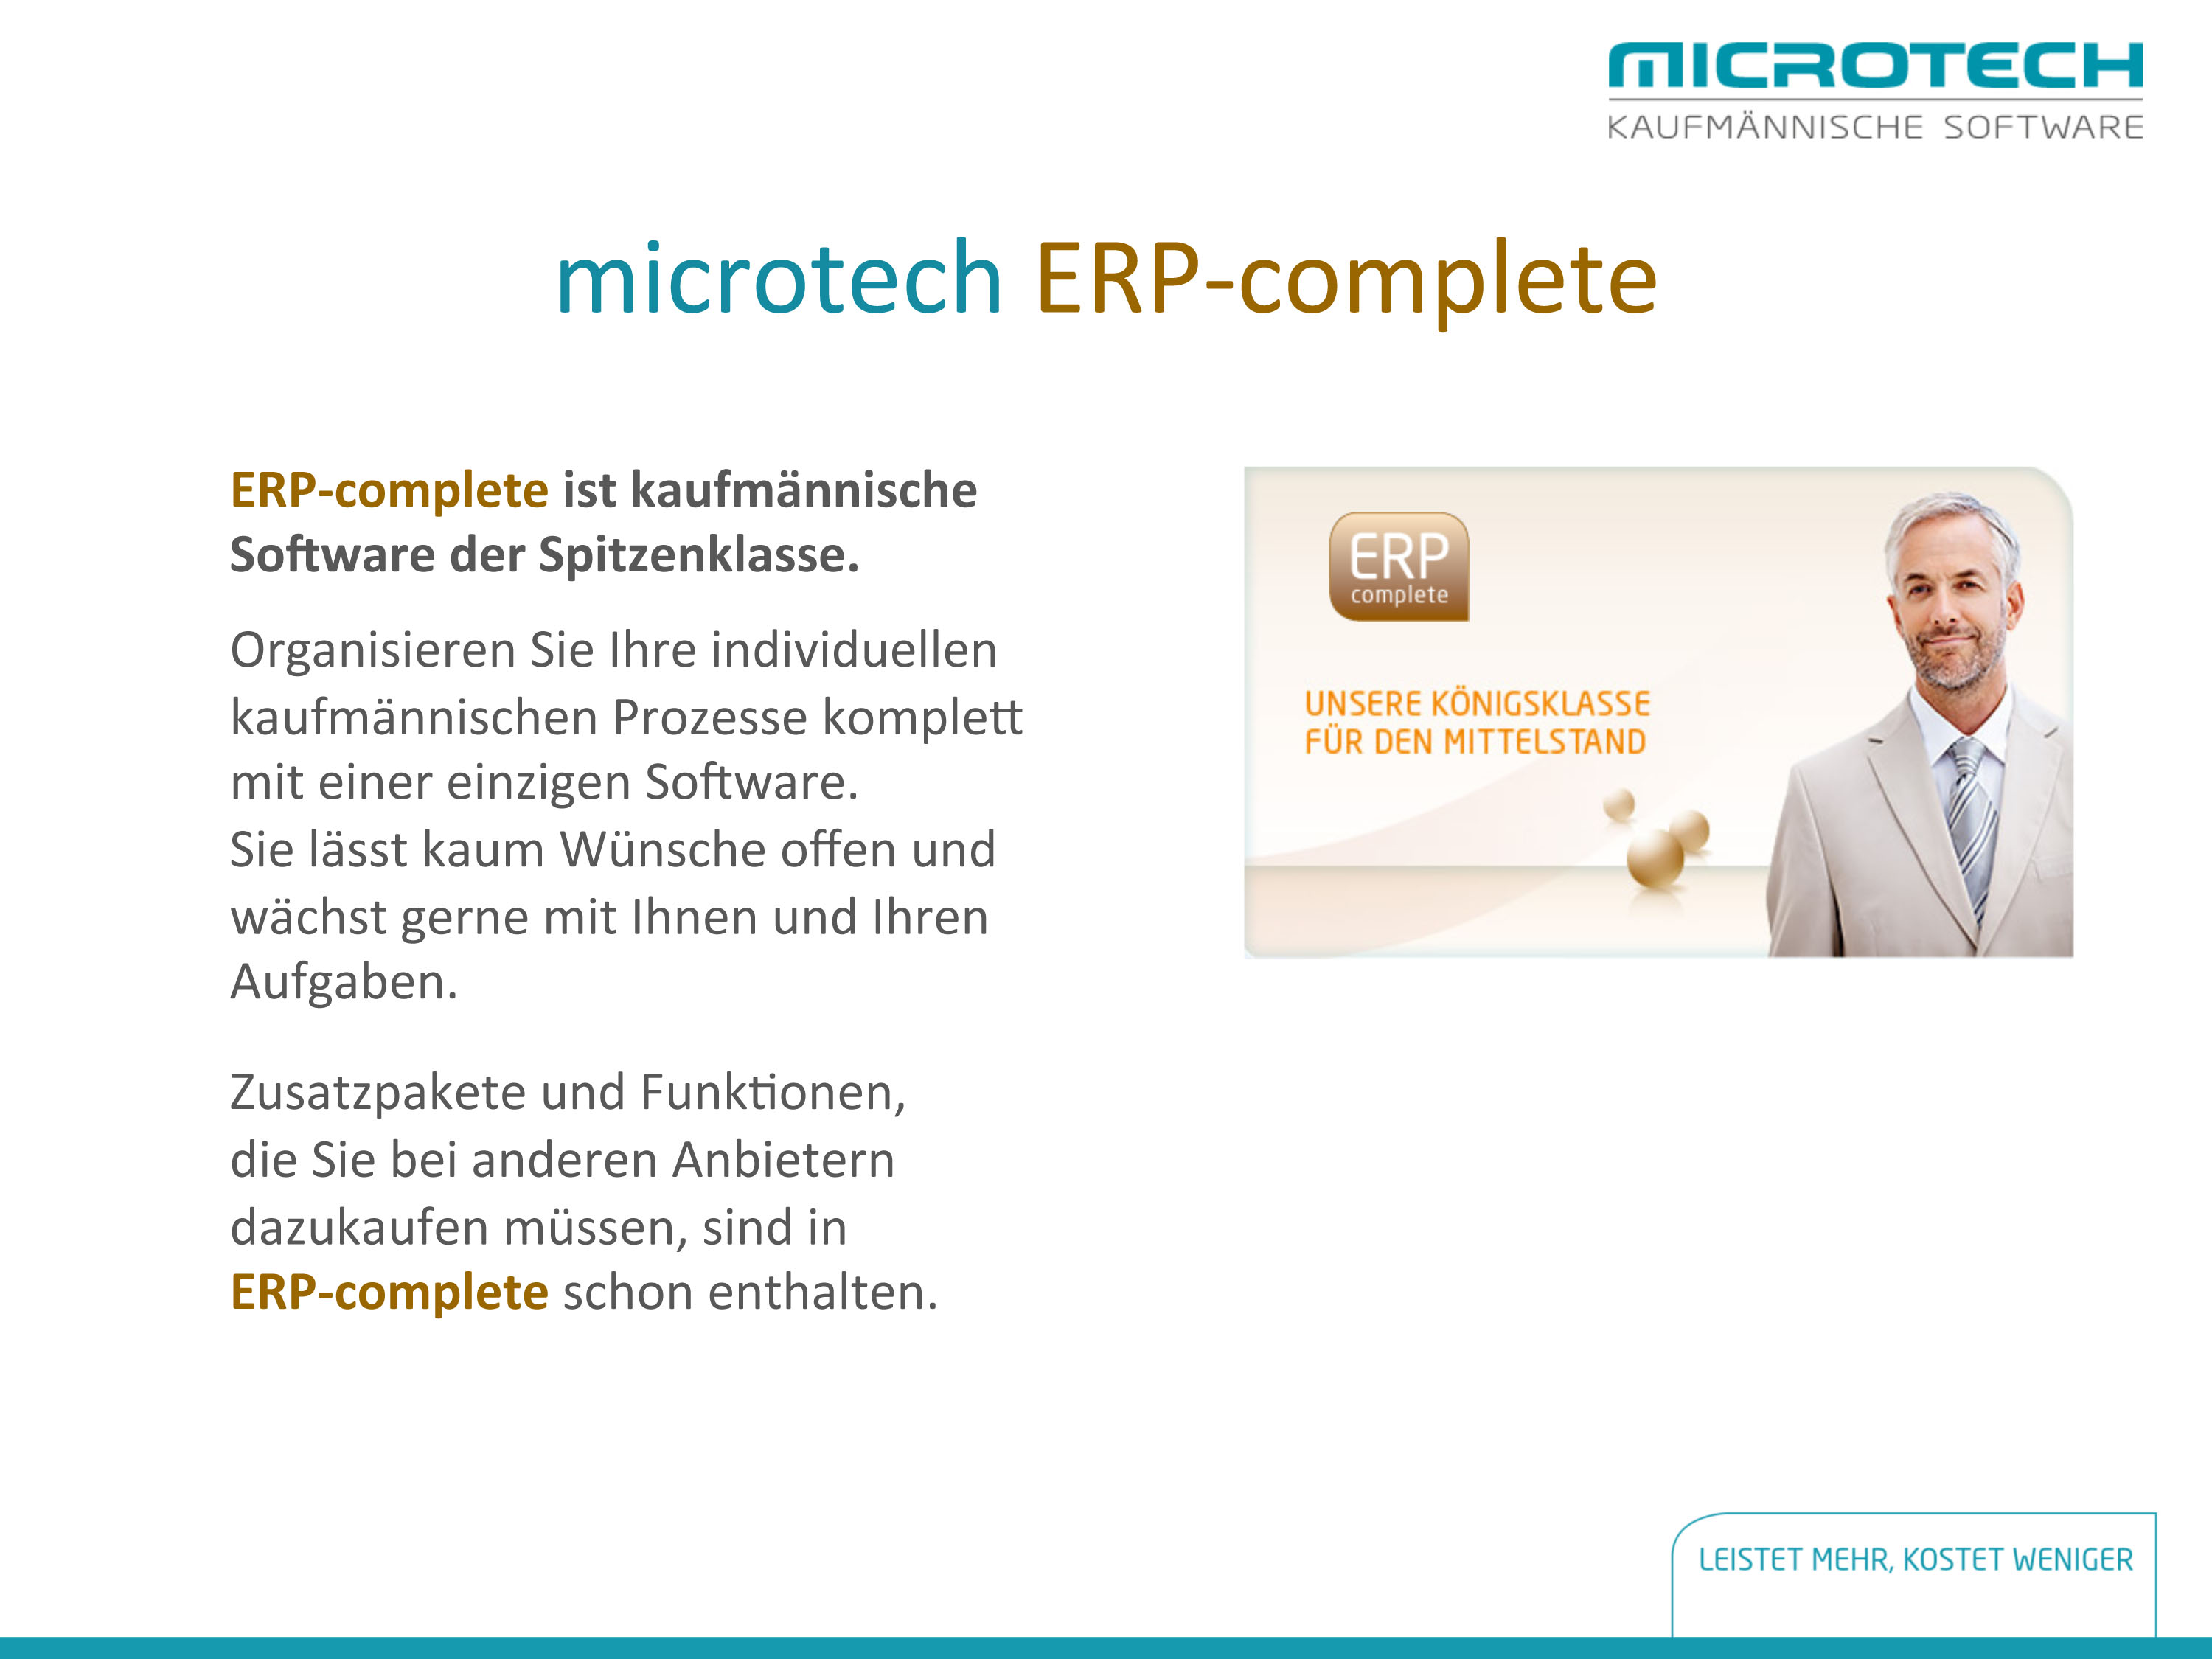 Microtech-7.jpg